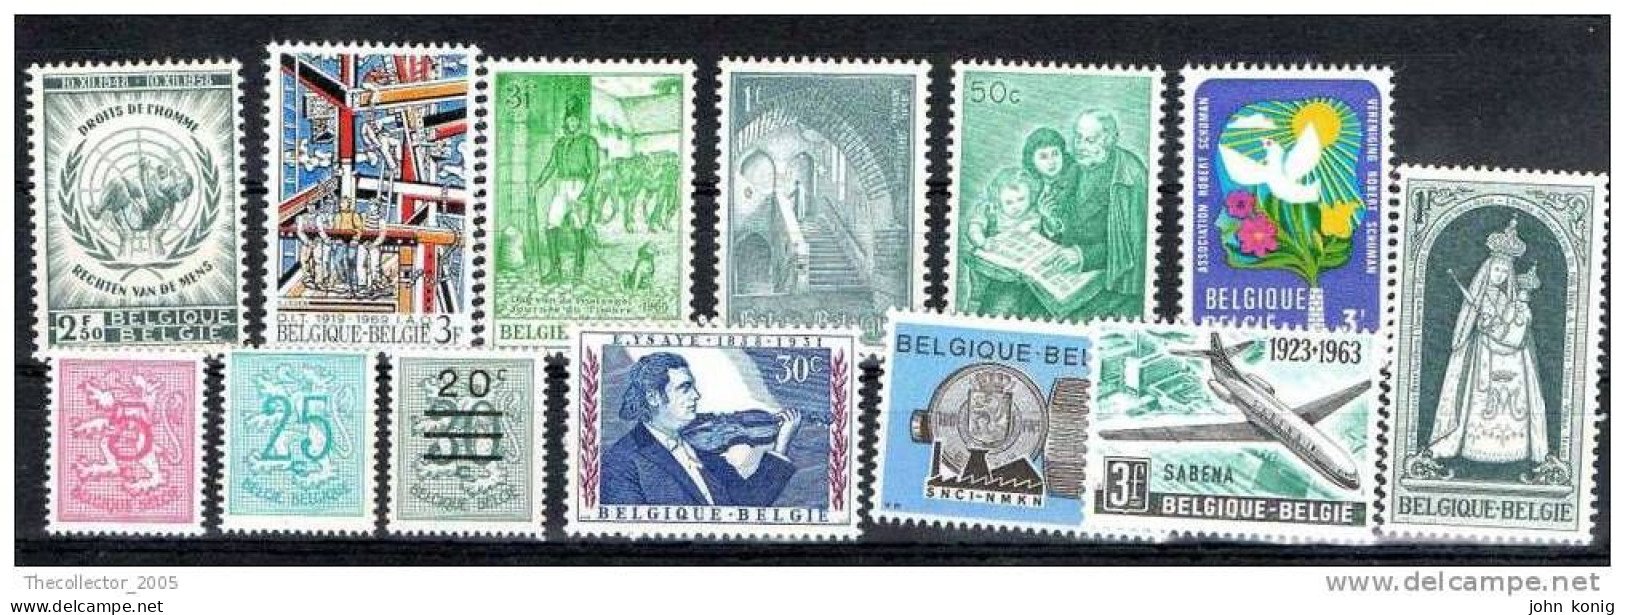 Belgio - Belgie - Belgique - Stamps Lot - New - Neuf - Superbe Lot - Collections